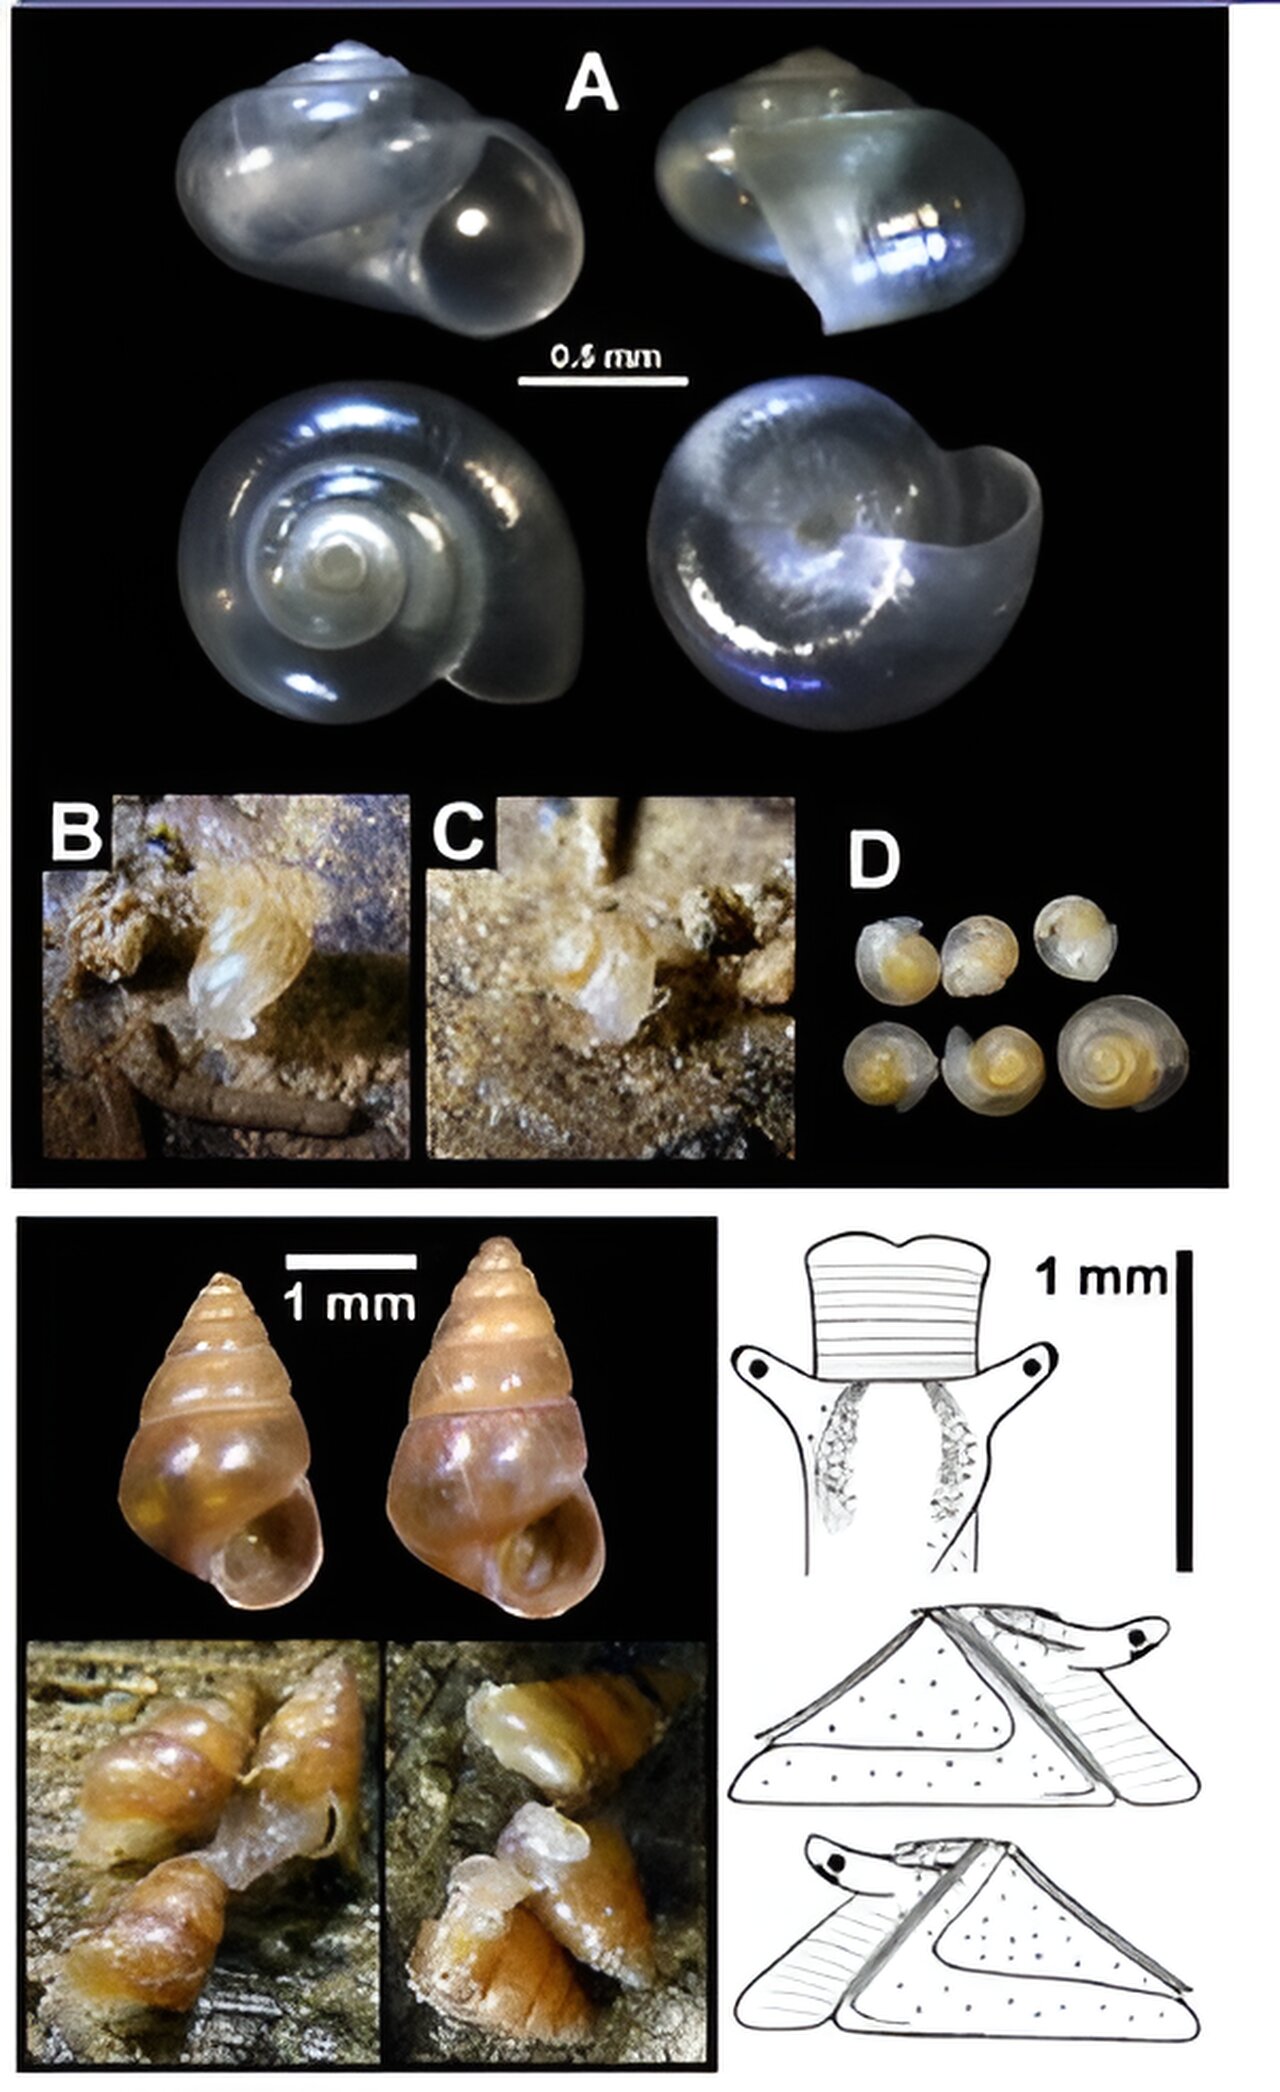 日本産の新種巻貝の分類学的分類